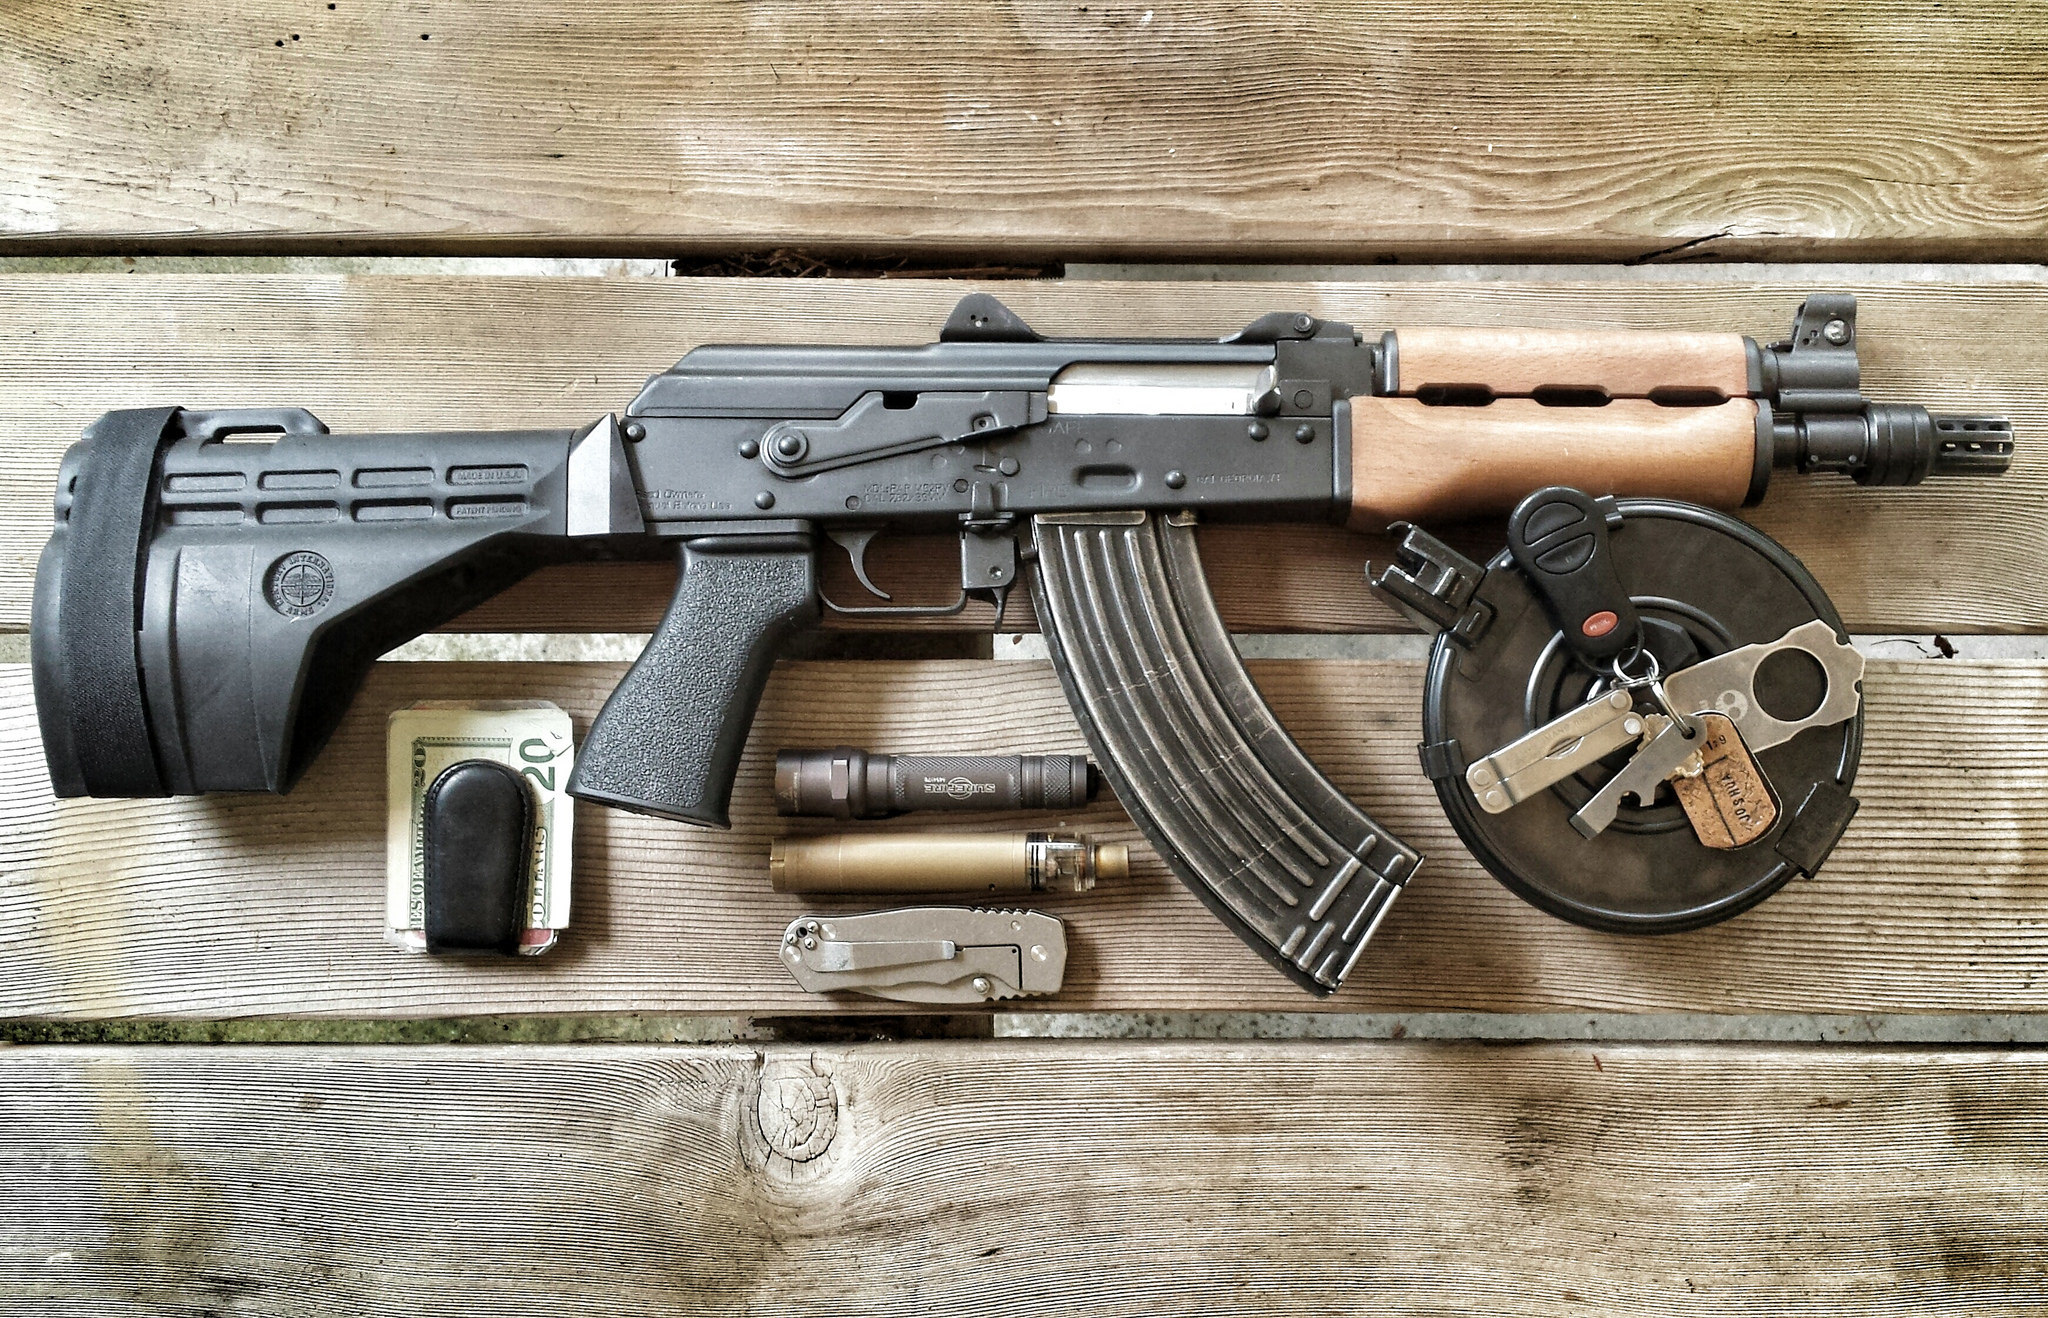 General 2048x1318 weapon gun ammunition wood money top view AK-47 AK-47 Draco drum magazine carbine Russian/Soviet firearms